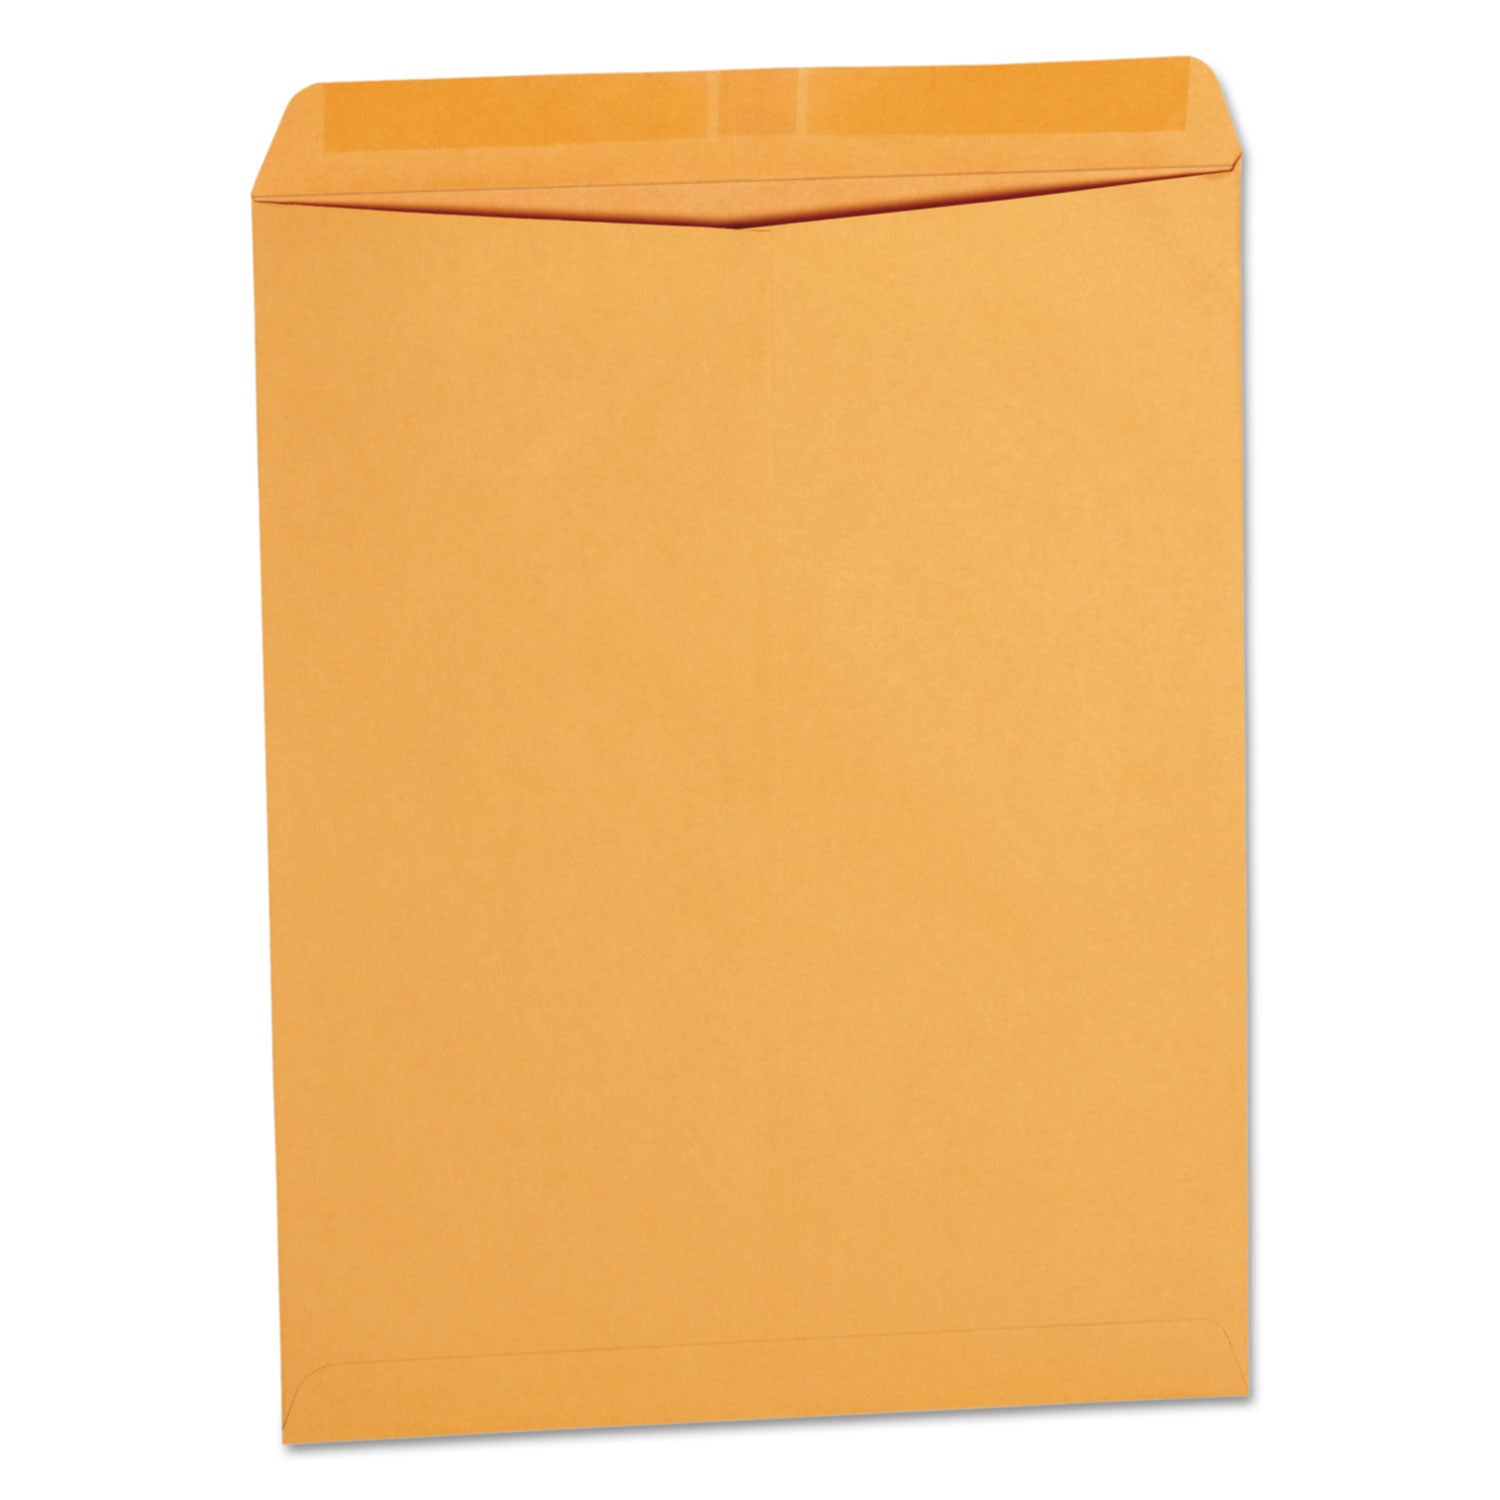 Catalog Envelope, 28 lb Bond Weight Kraft, #14 1/2, Square Flap, Gummed Closure, 11.5 x 14.5, Brown Kraft, 250/Box - 